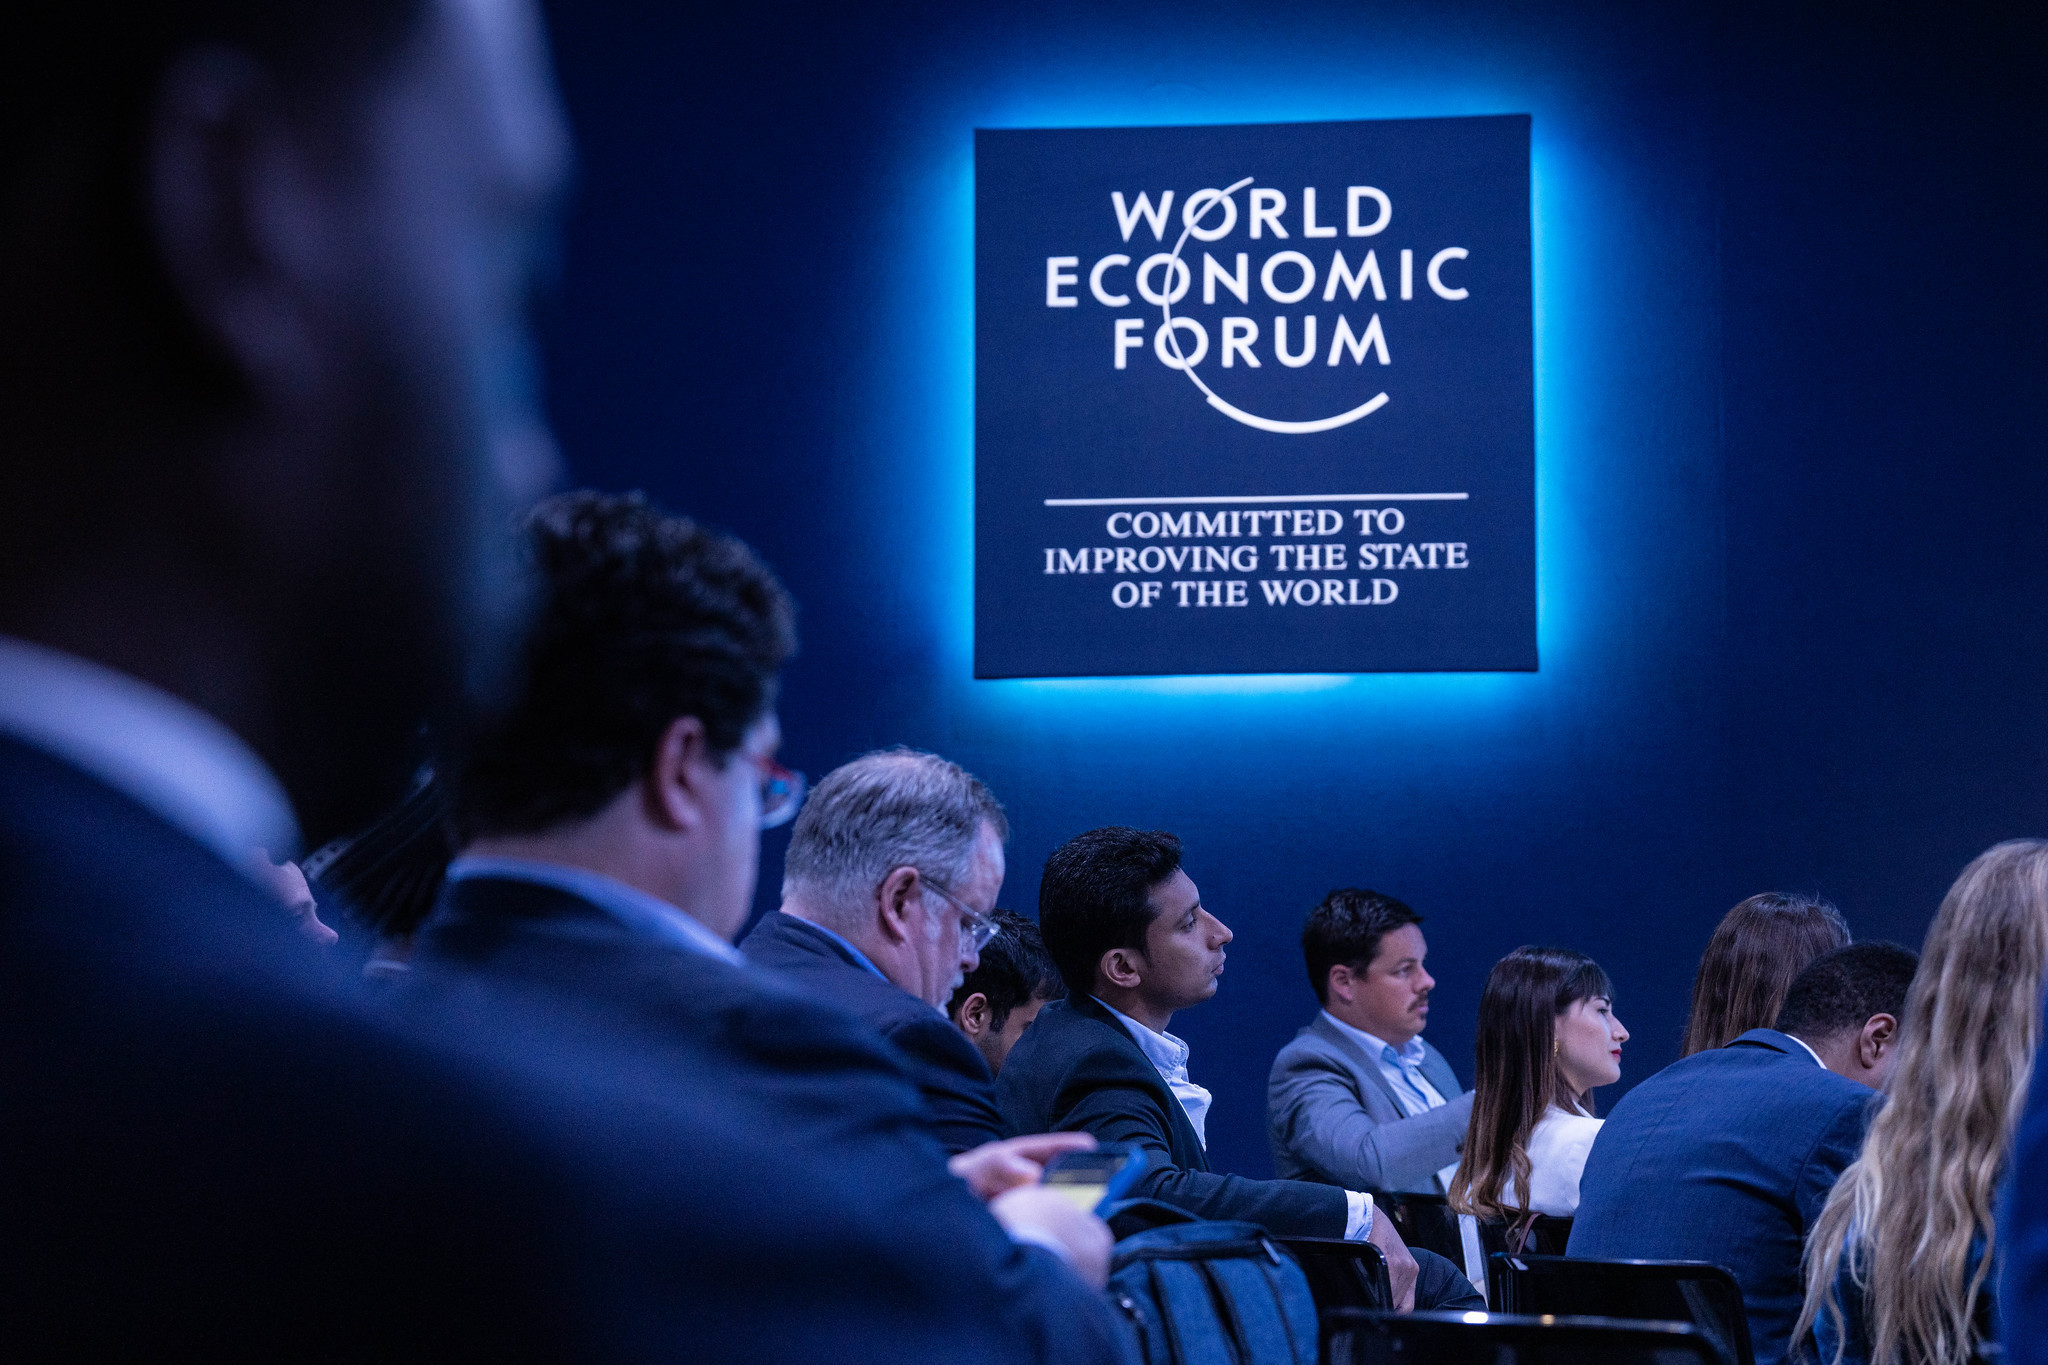 List of 10 Emerging Technologies in 2023 - World Economic Forum Report